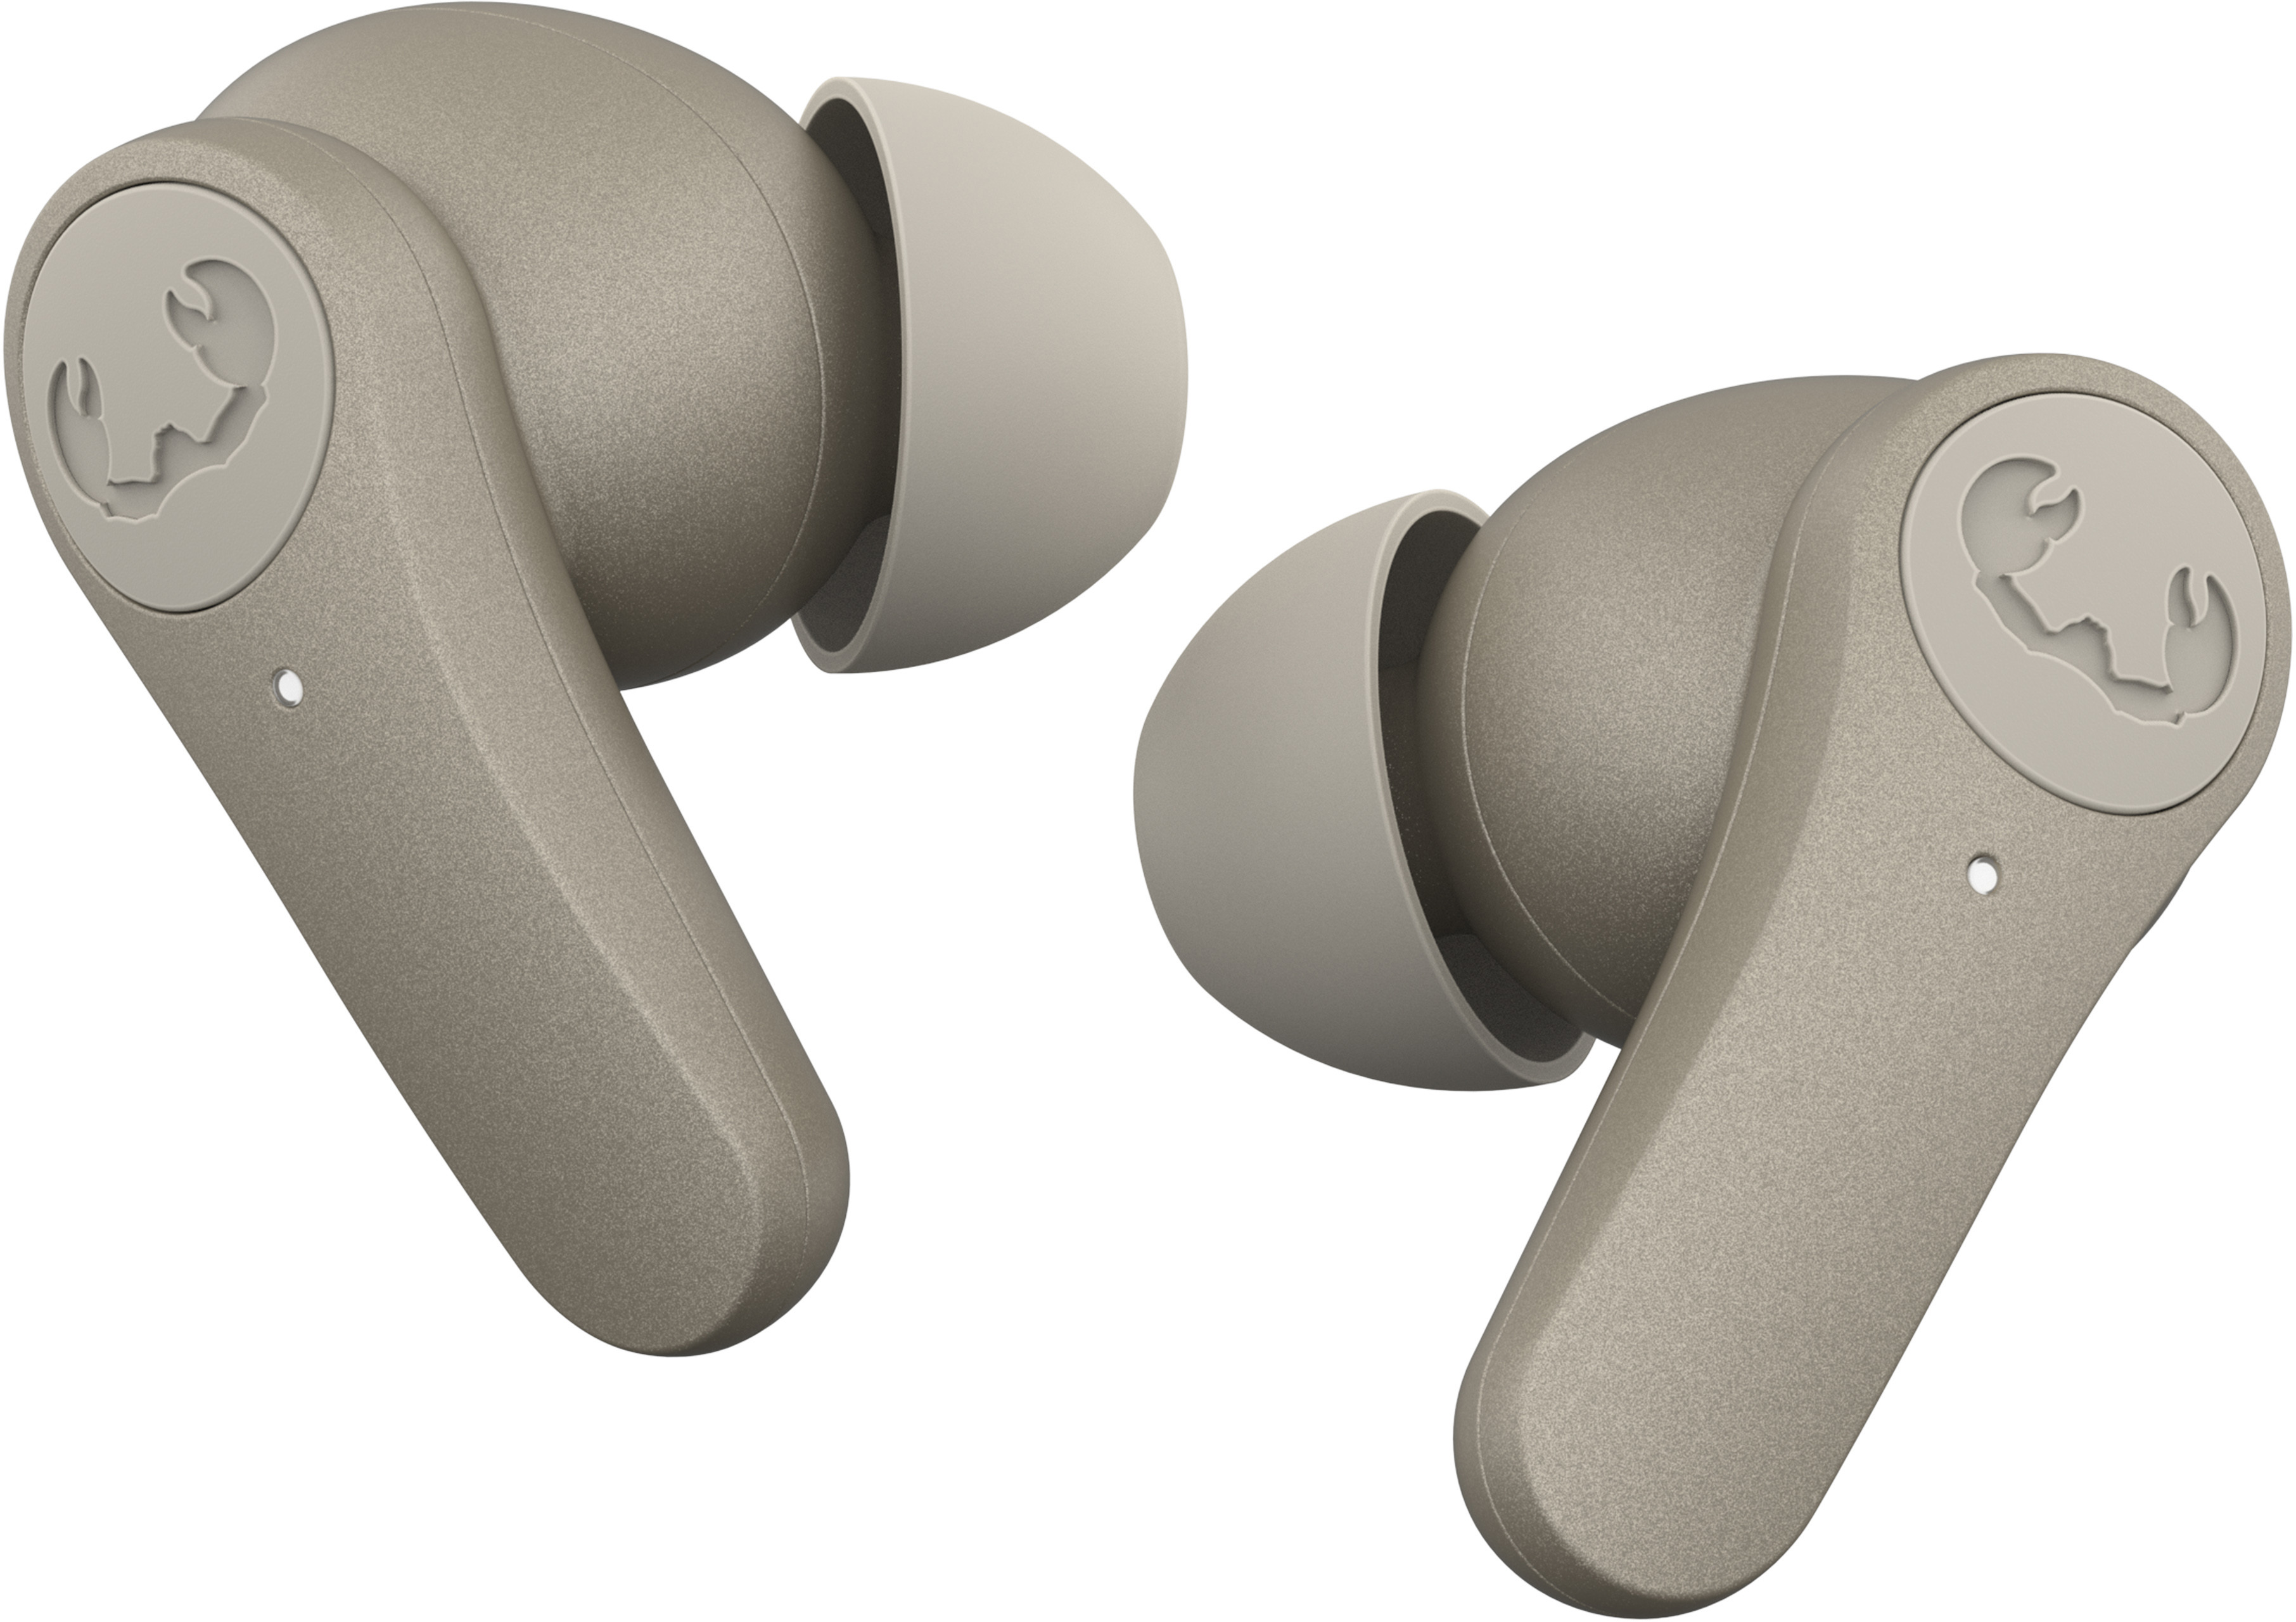 FRESH'N REBEL Twins Rise - TWS earbuds 3TW3500SS Silky Sand Hybrid ANC